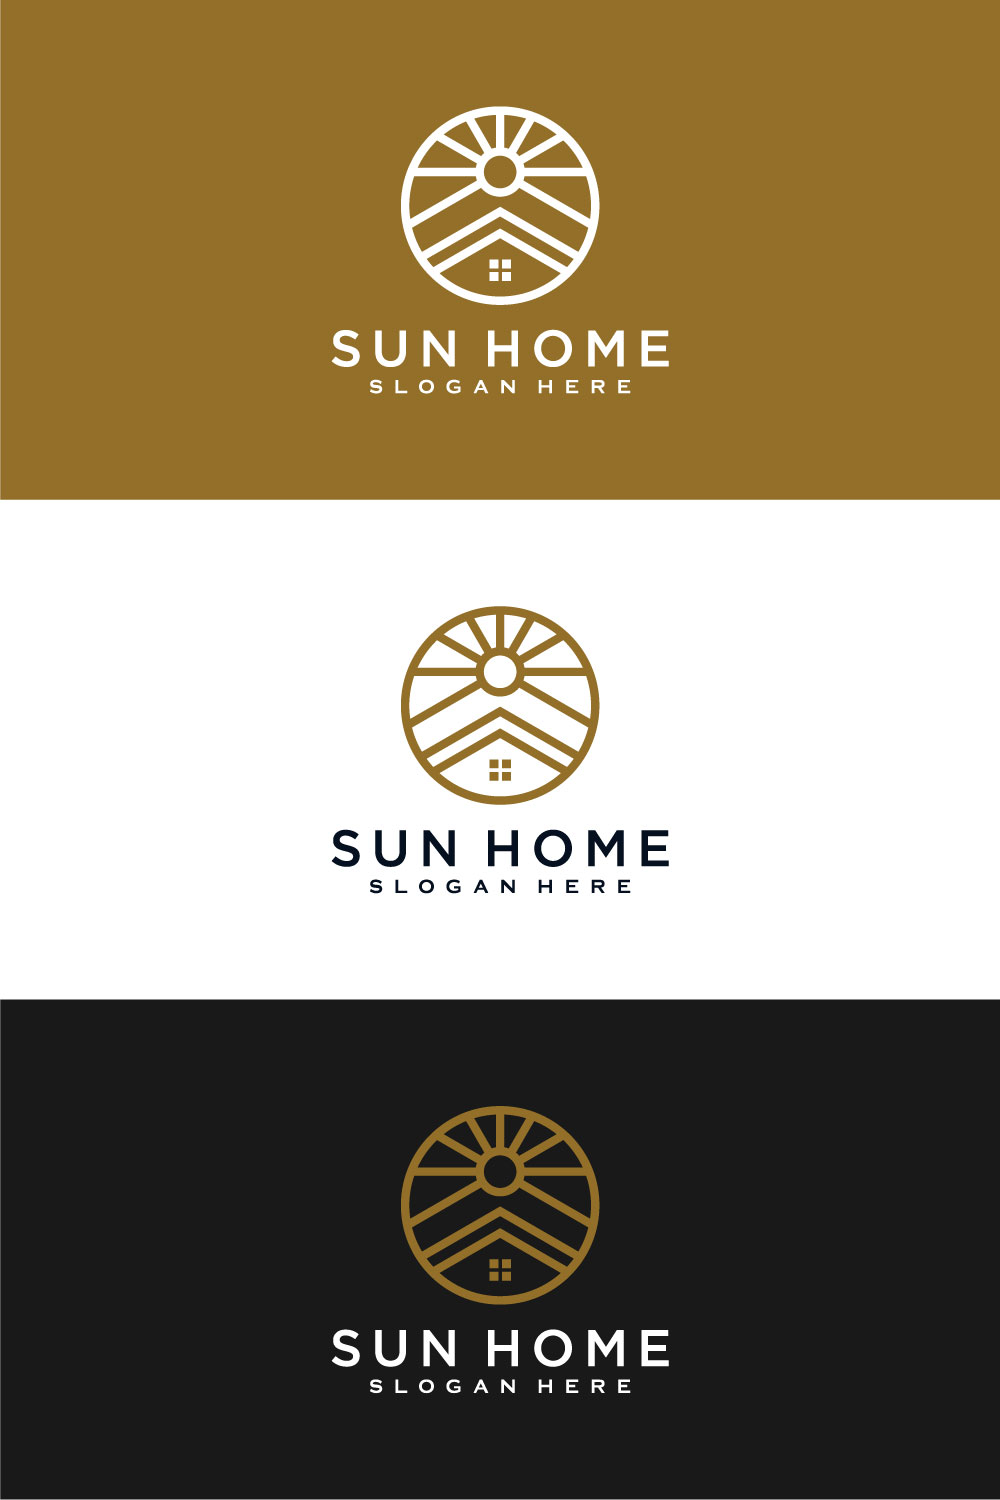 Minimalist Line Abstract Home with Sun Light Logo Design pinterest.